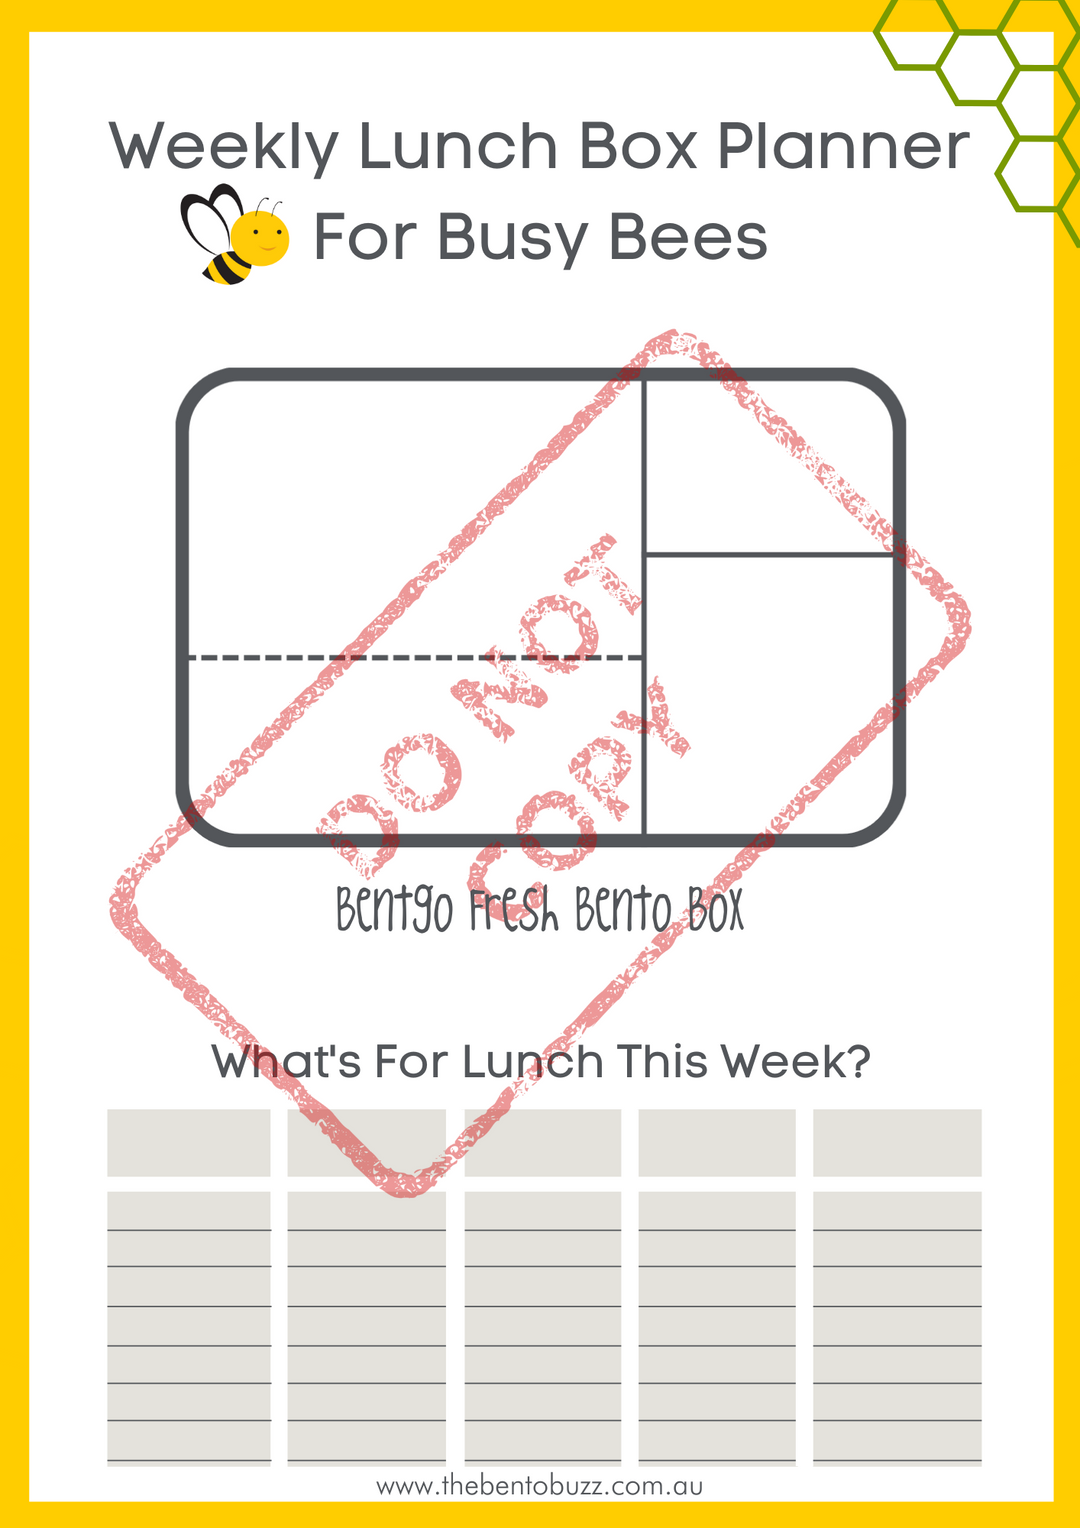 Download & Print Lunch Box Planner - Bentgo Fresh